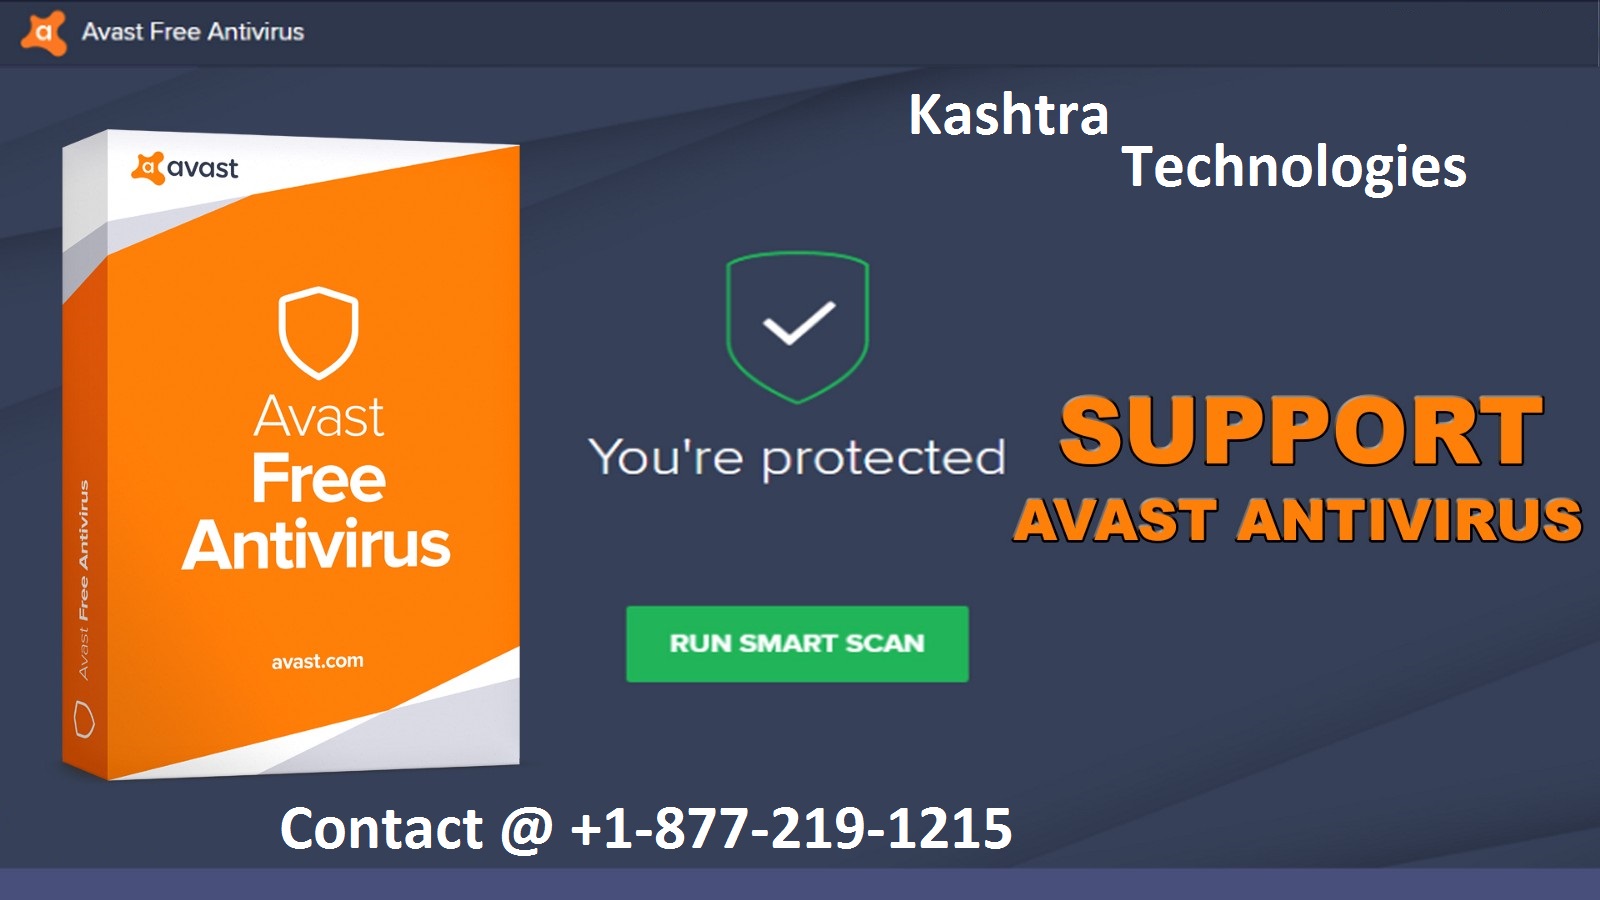 Avast antivirus service